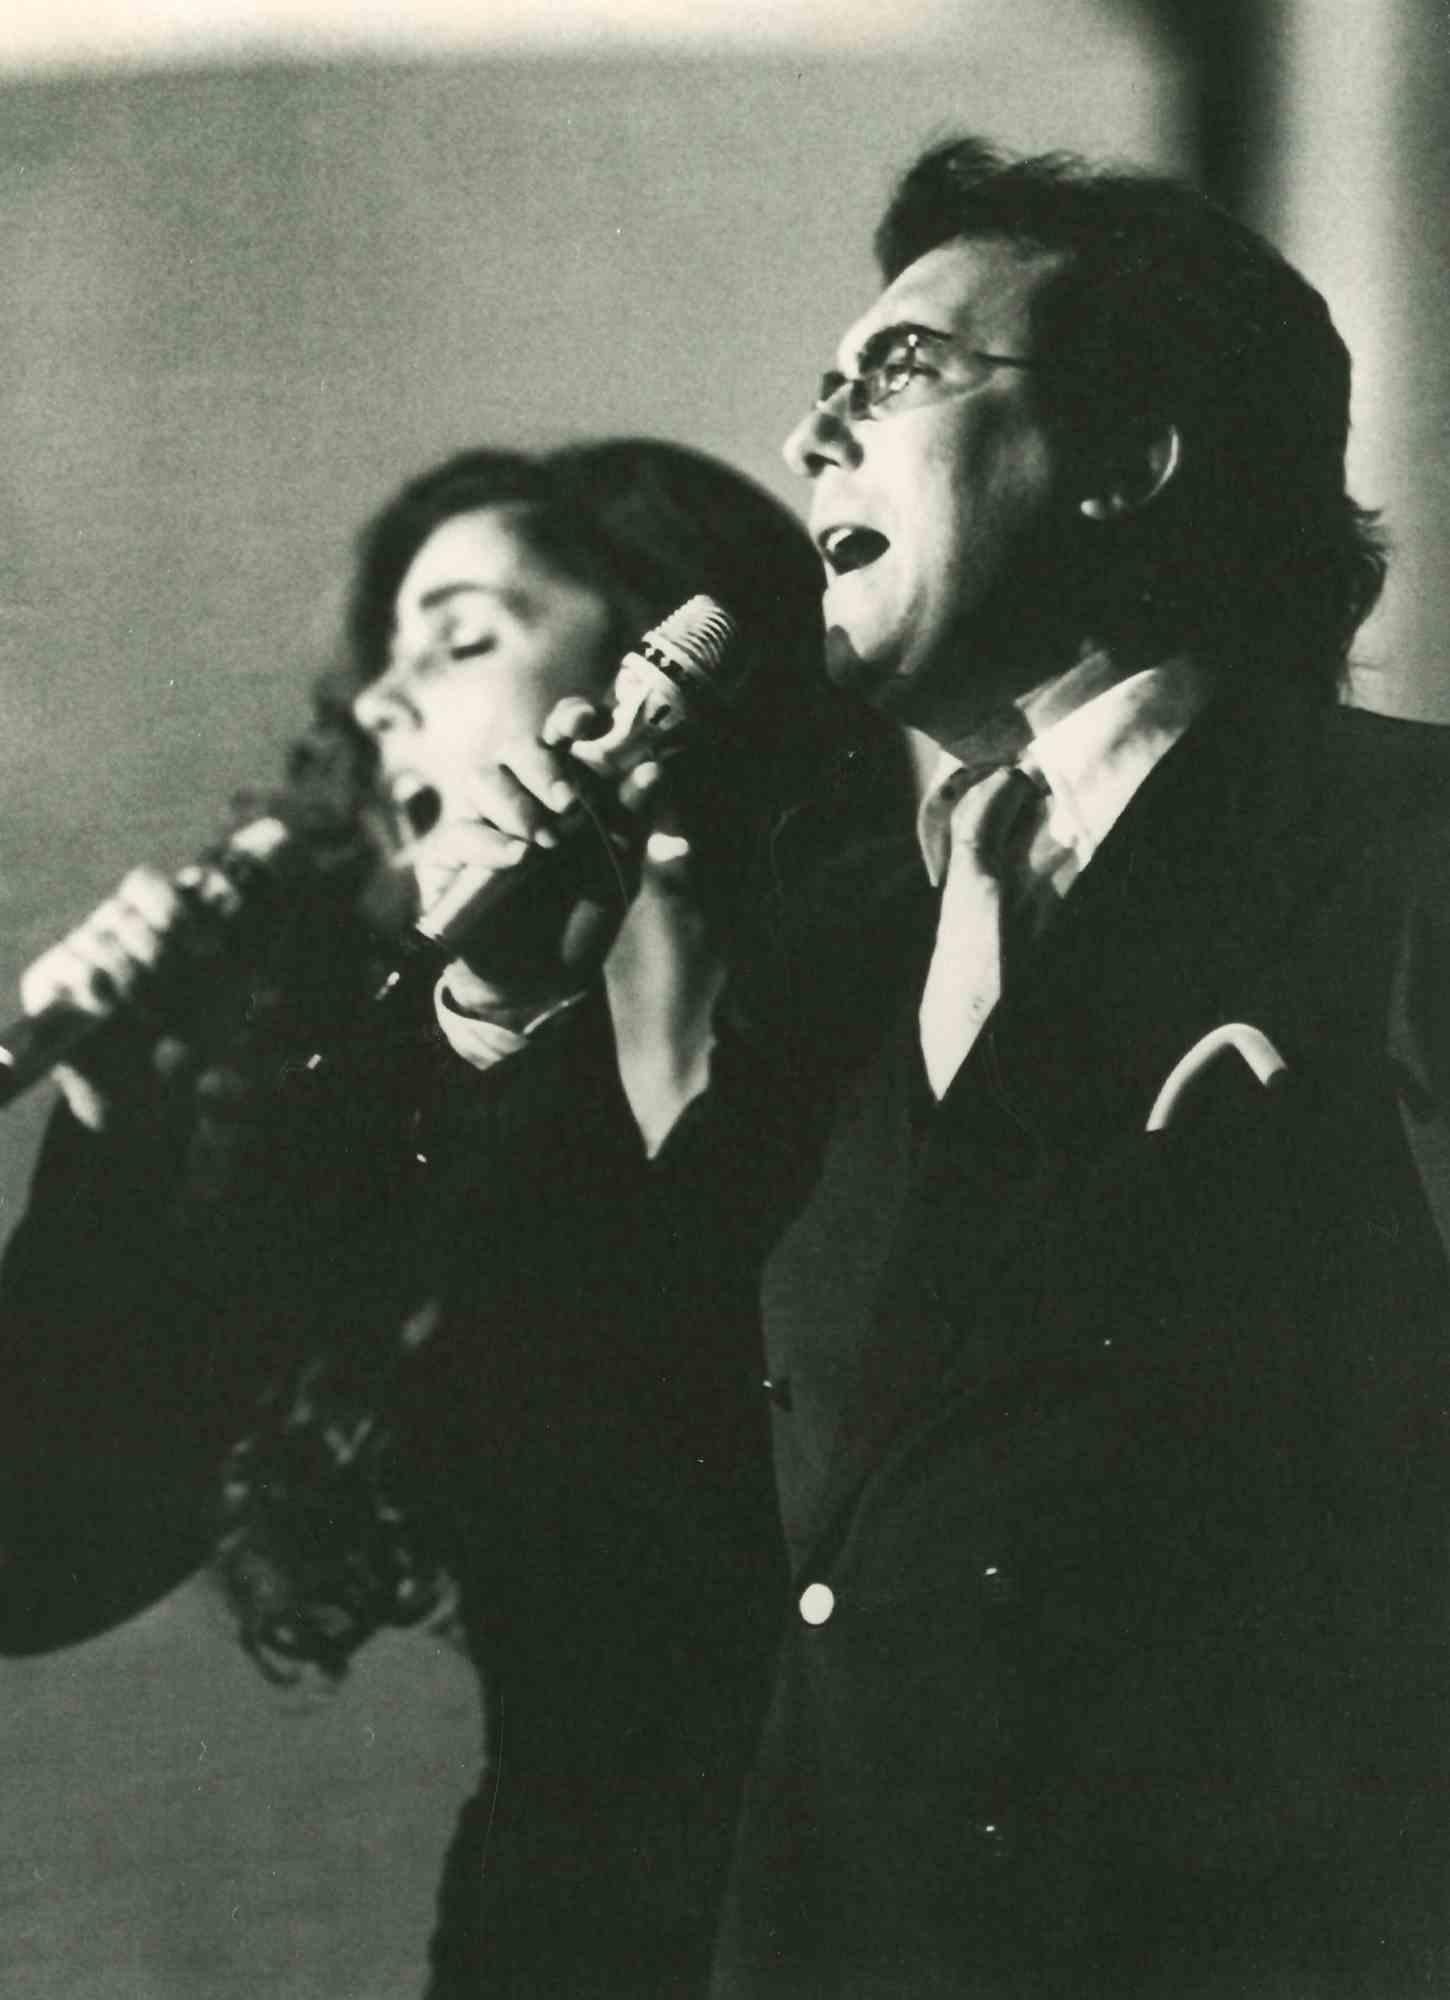 Al Bano and Romina Power - Photograph - 1980s